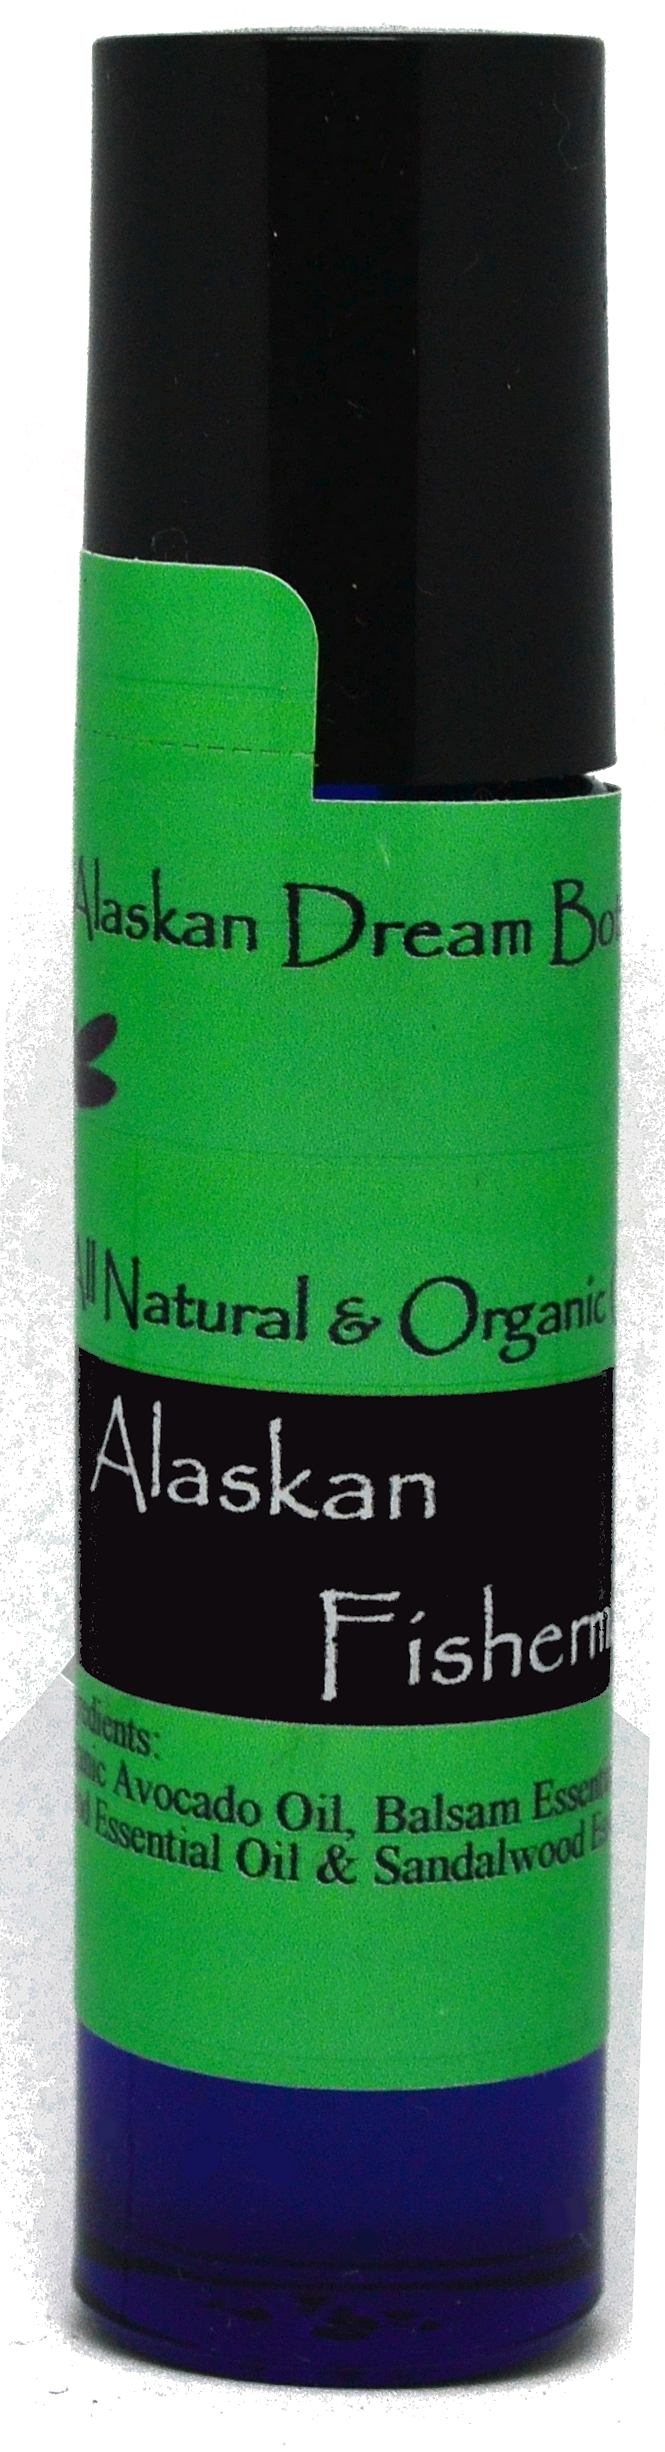 Alaskan Fisherman Roll On Cologne/Perfume - Alaskan Dream Botanicals